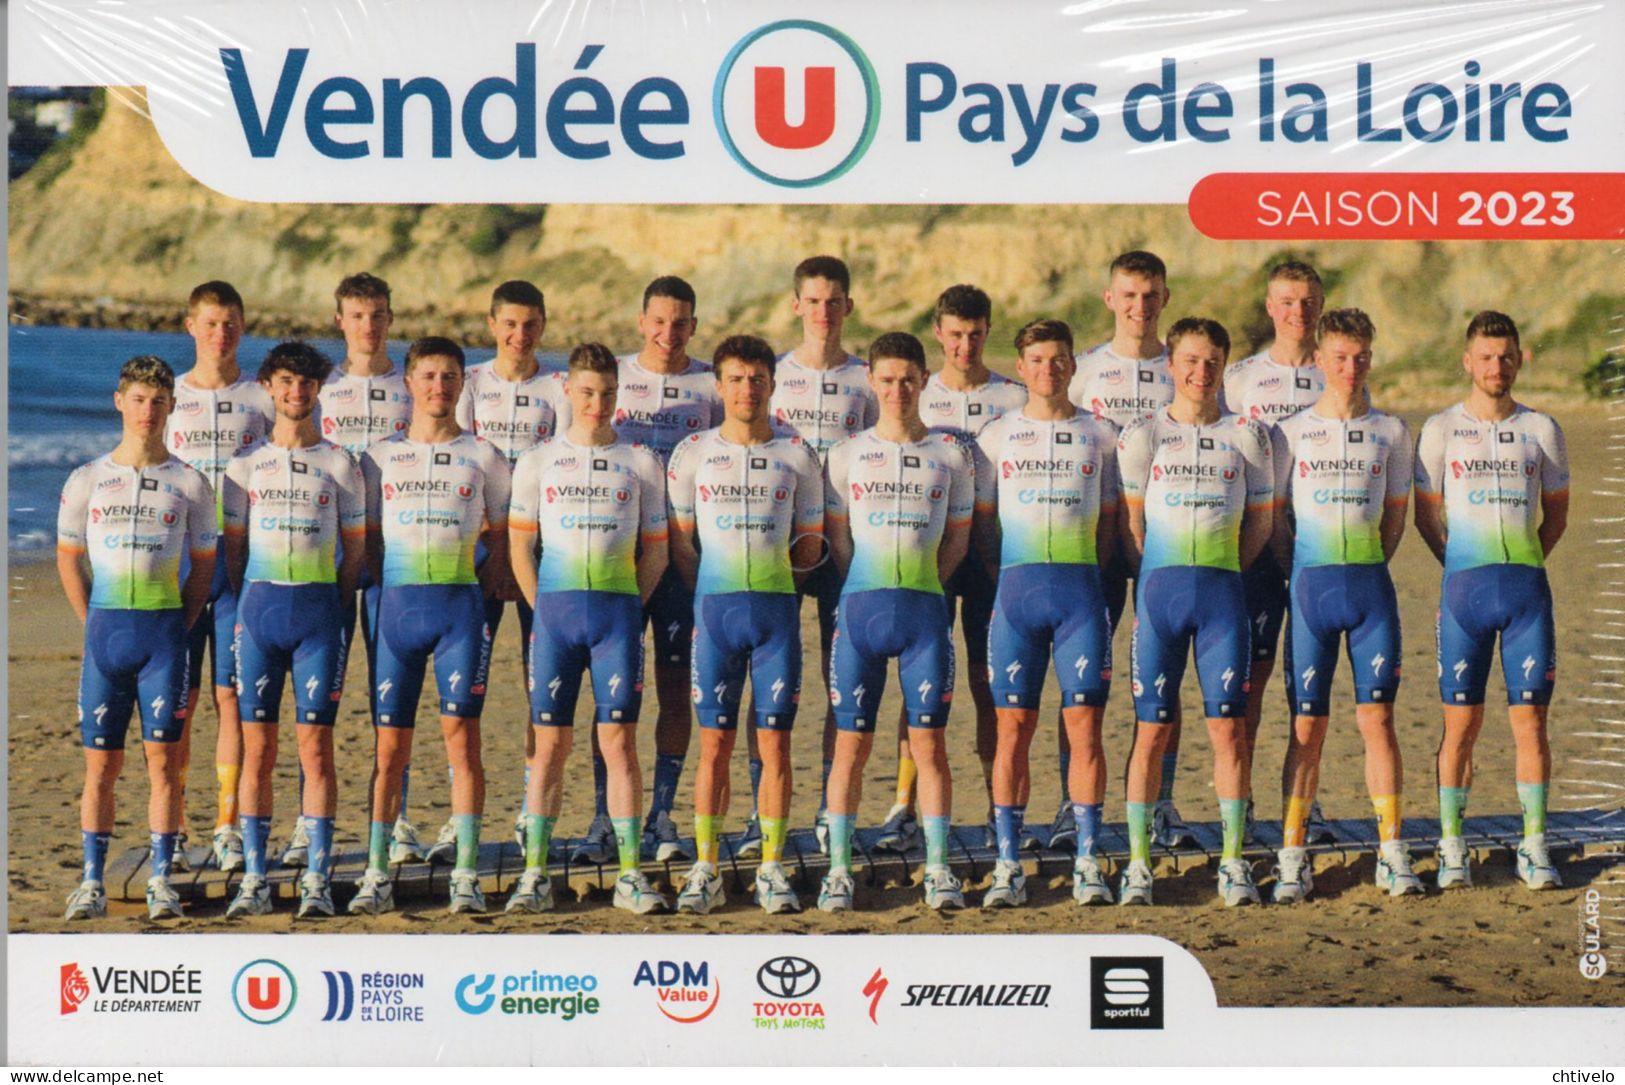 Cyclisme, Serie Vendée U 2023, Sous Blister - Cyclisme